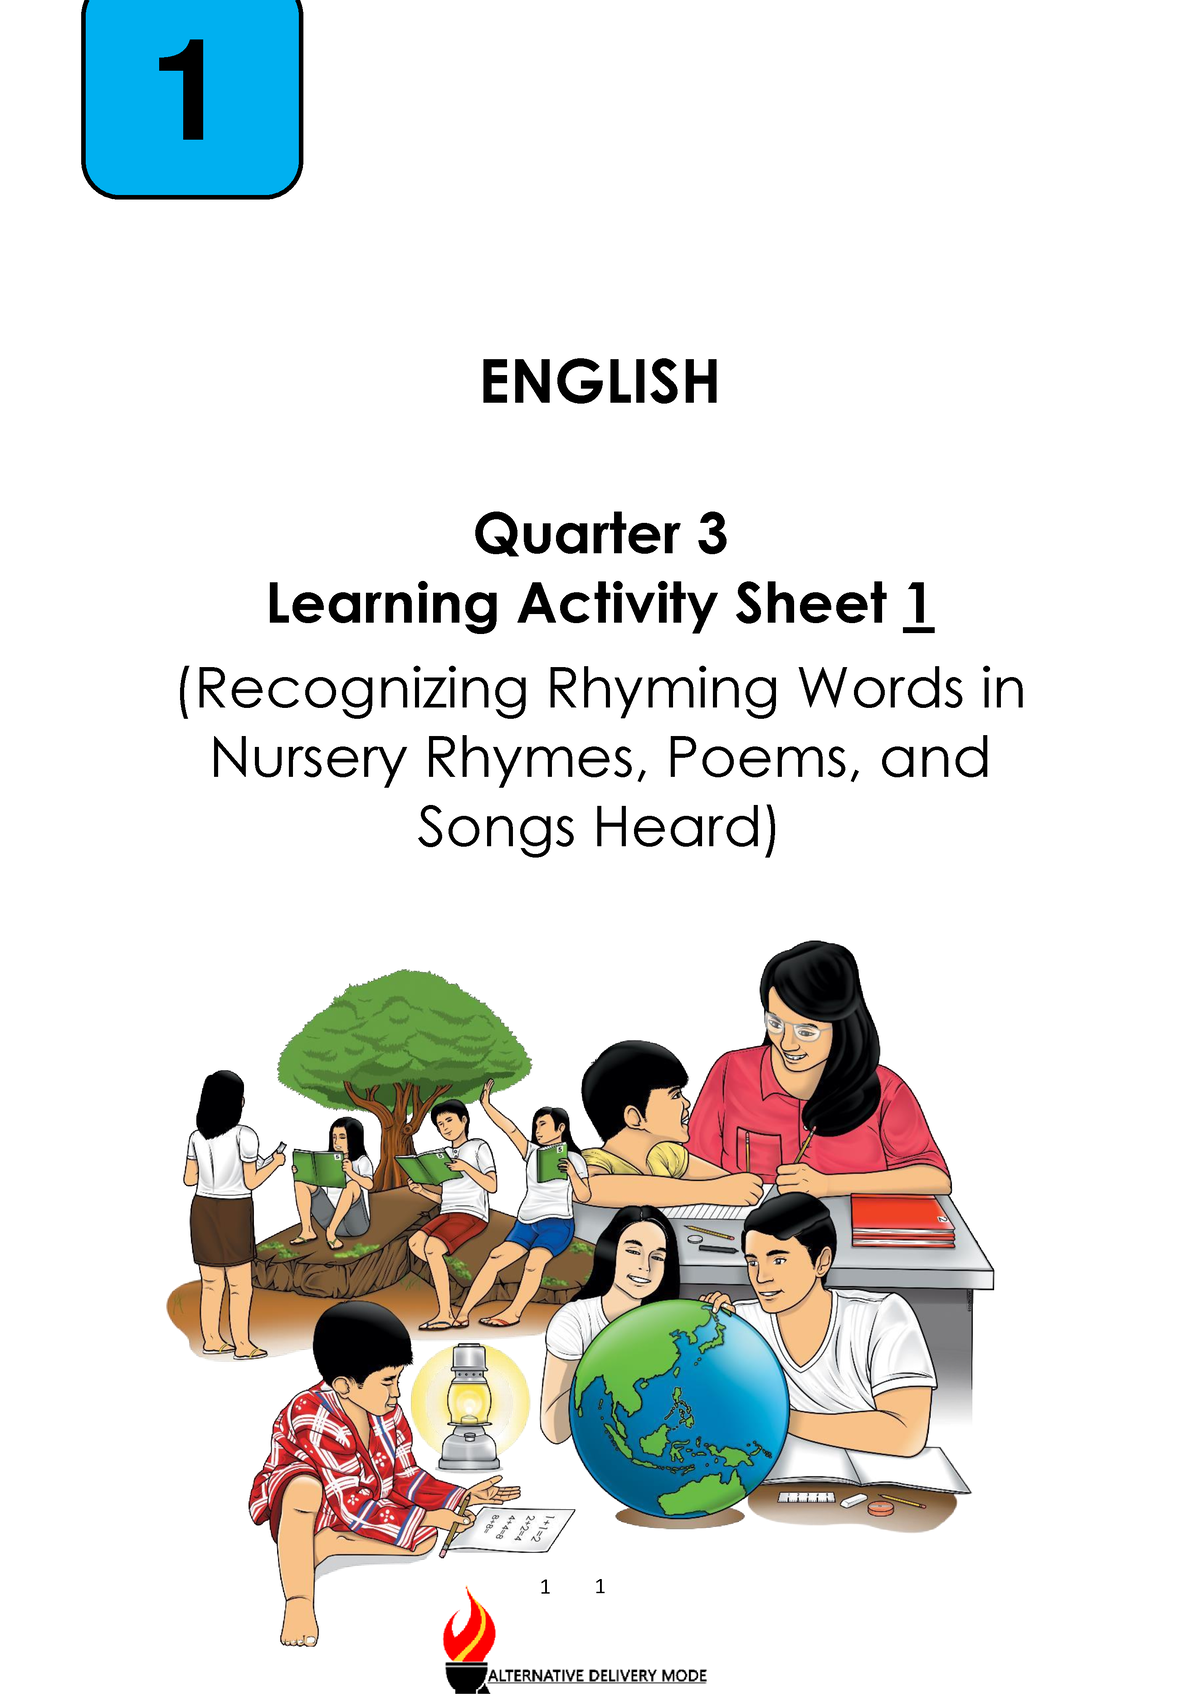 q3-english-1-las-week-1-learning-activity-sheets-1-english-quarter